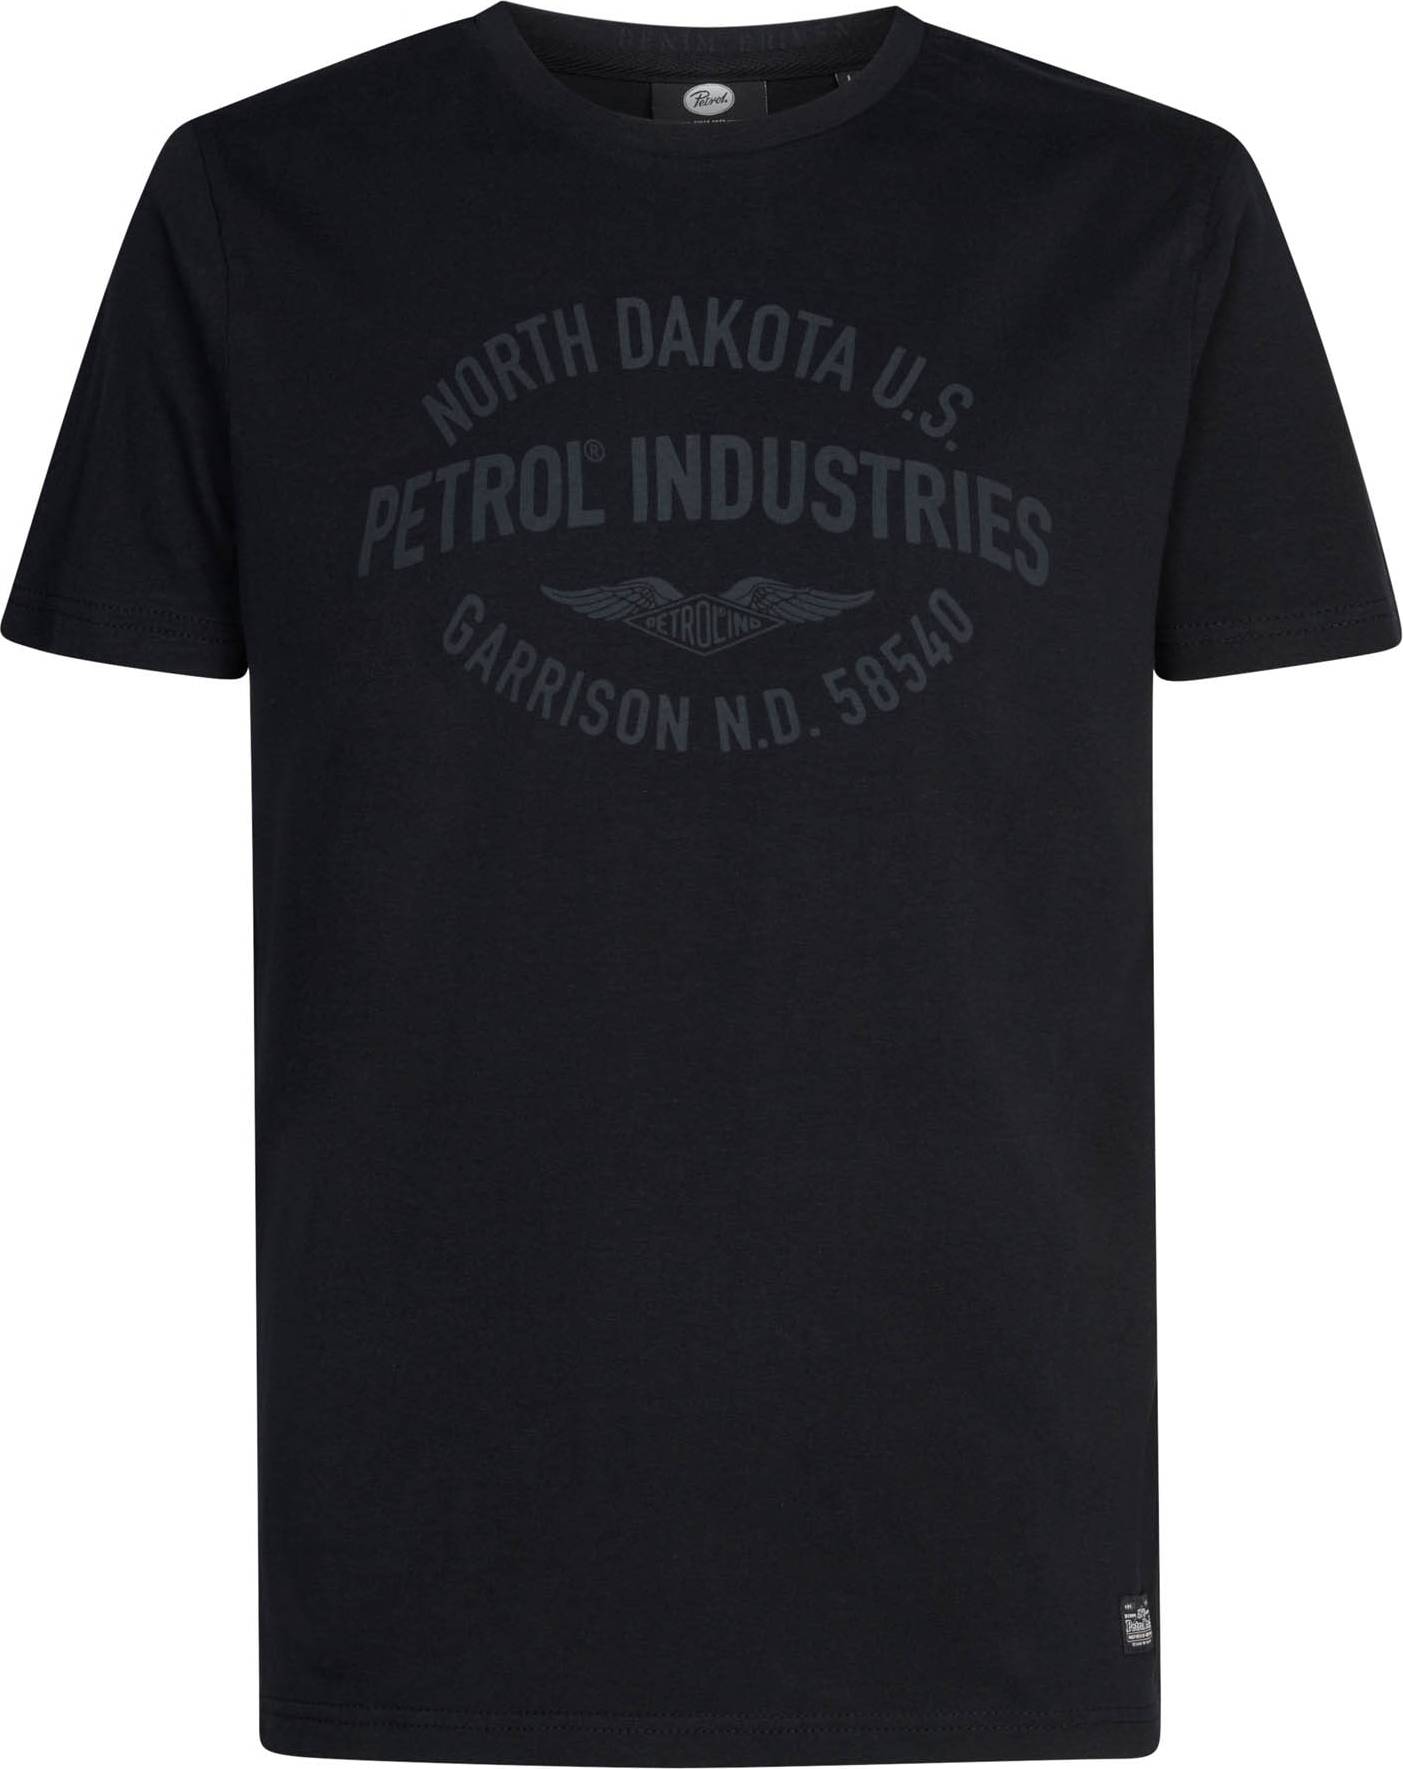 Tričko Petrol Industries černá